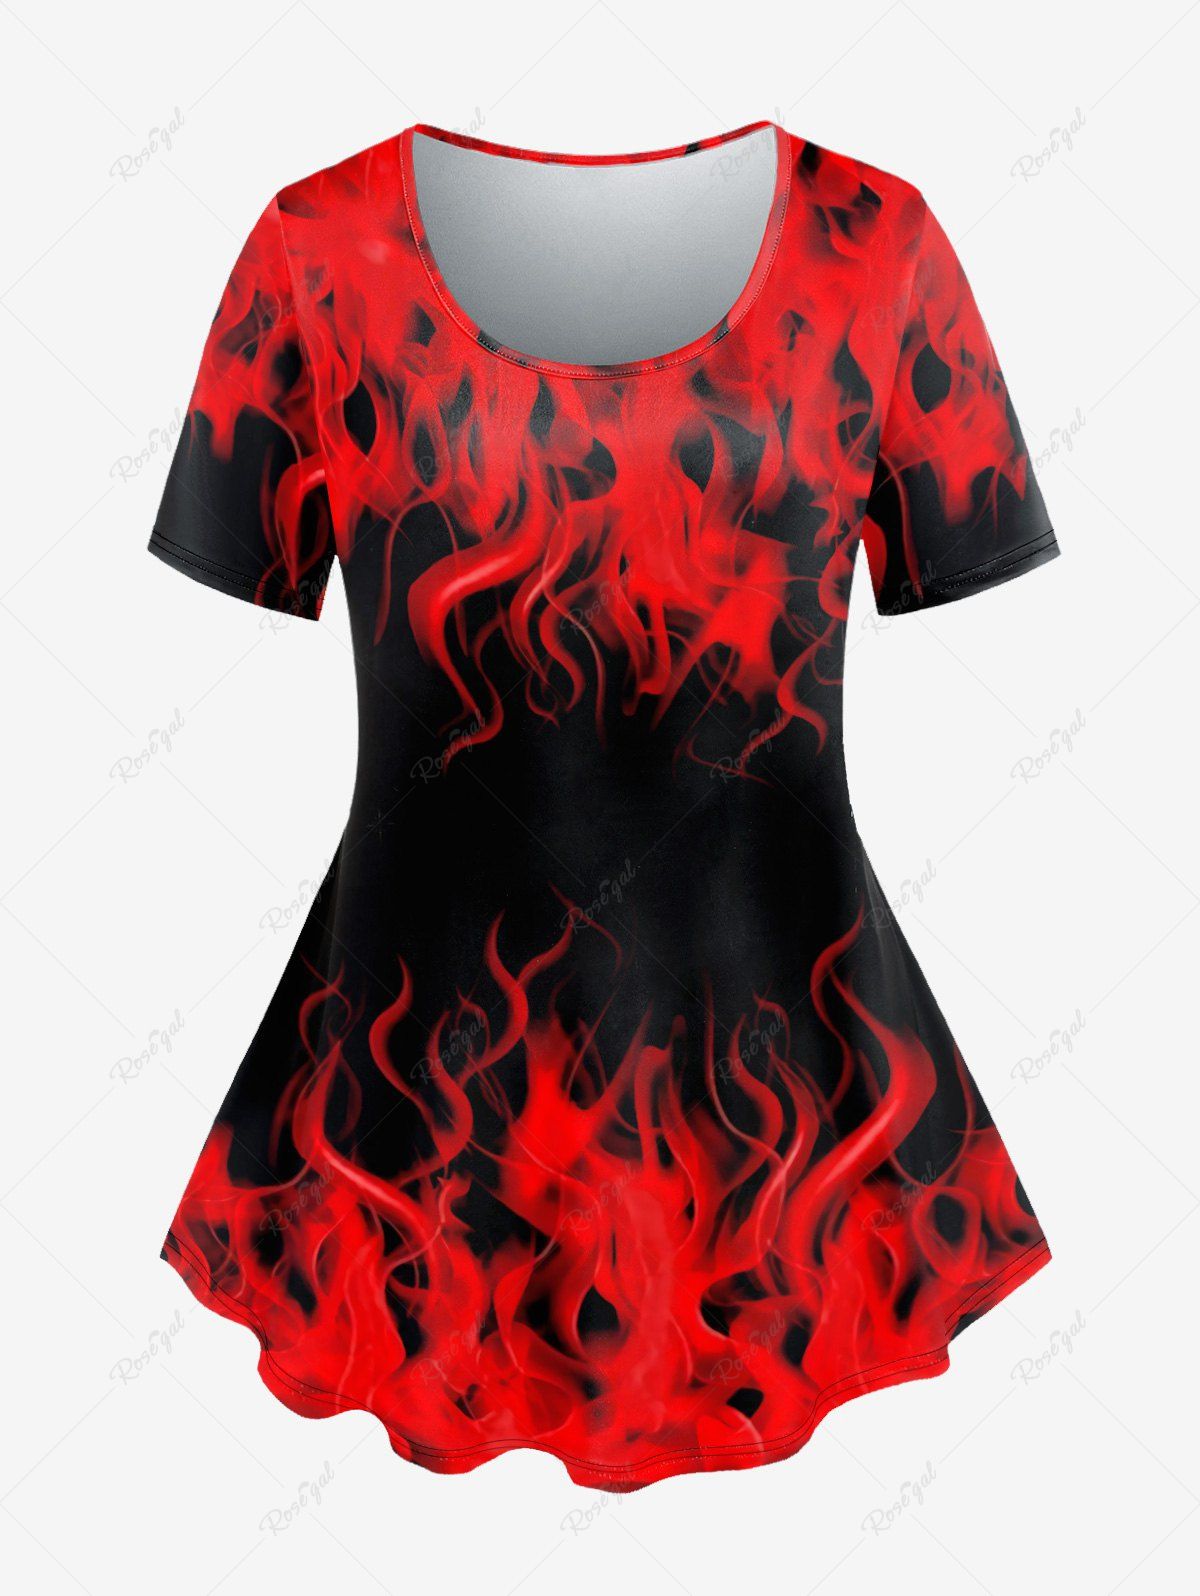 Trendy Gothic 3D Flame Print Short Sleeve T-Shirt  